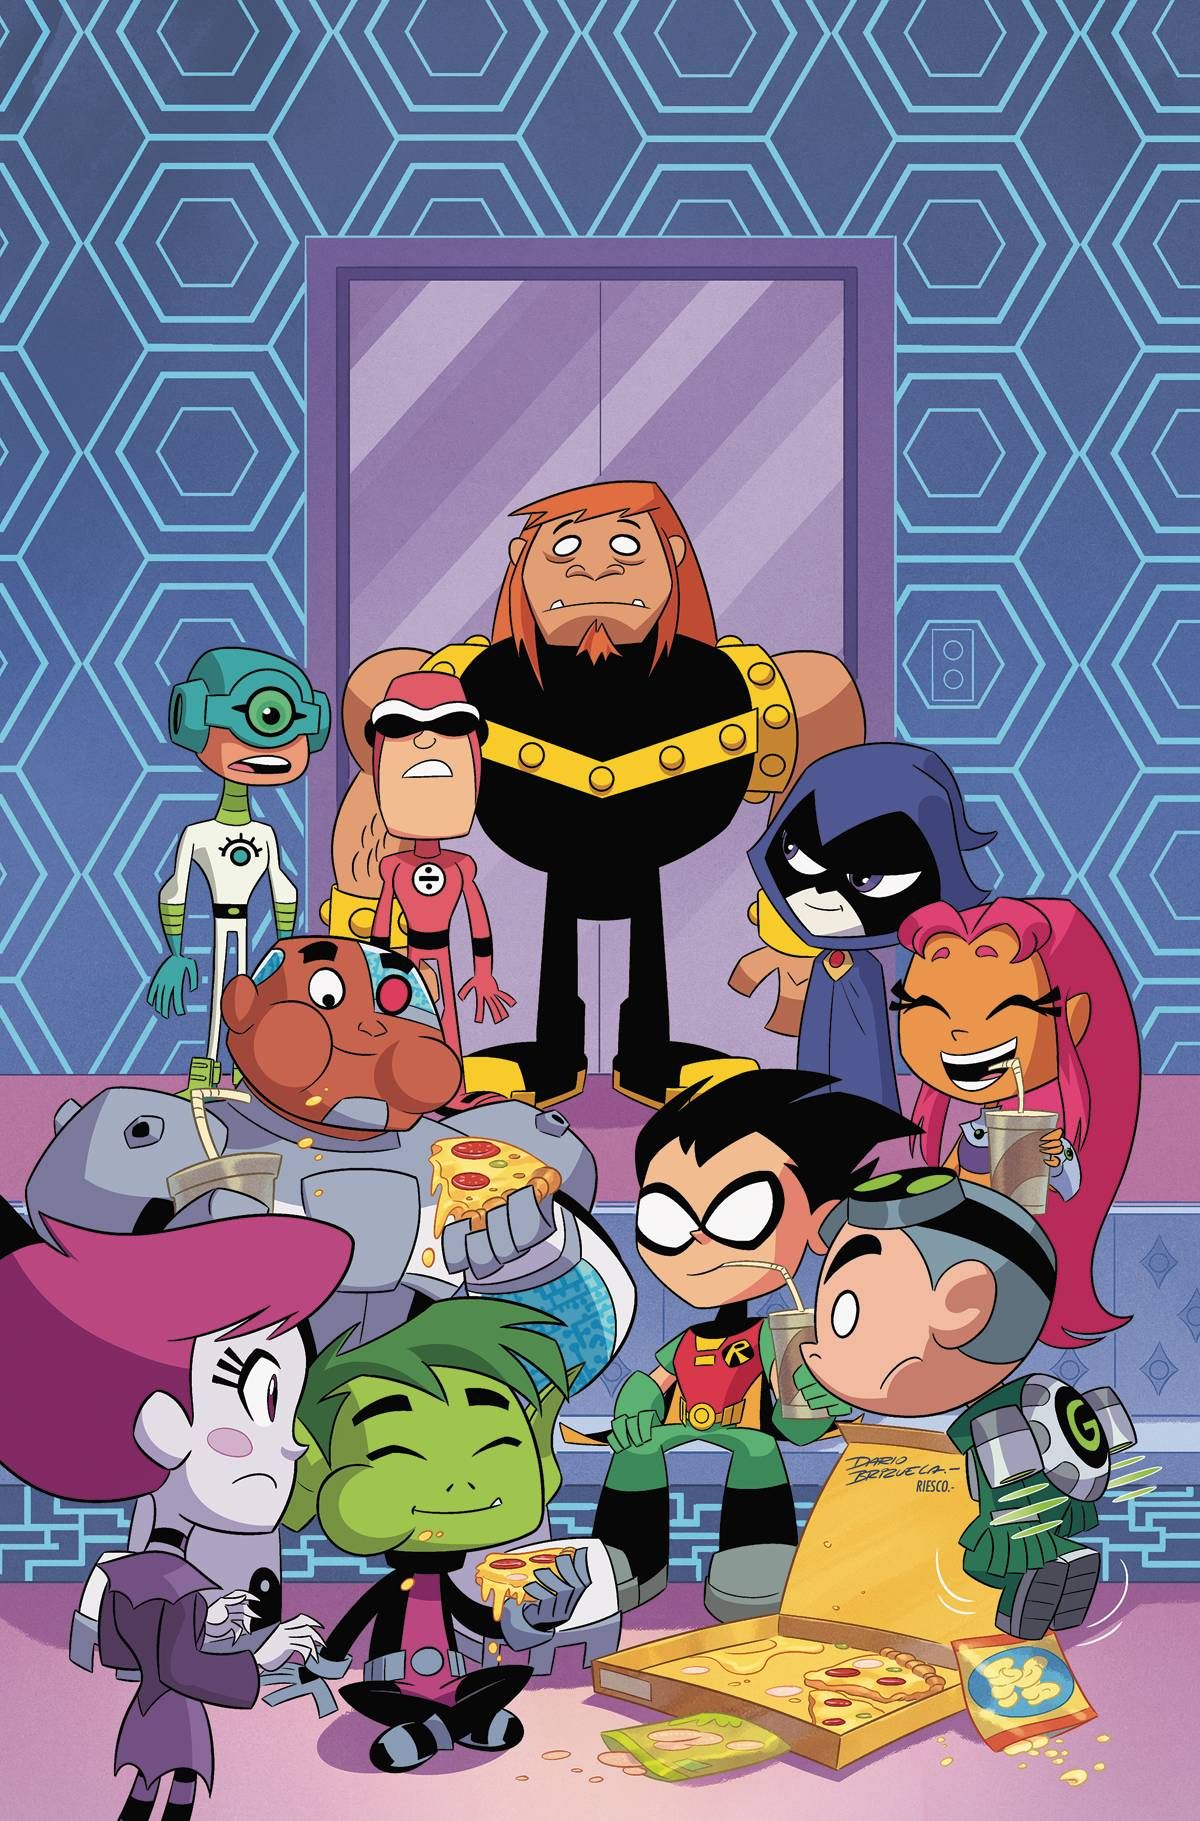 Teen Titans Go #21 Comic